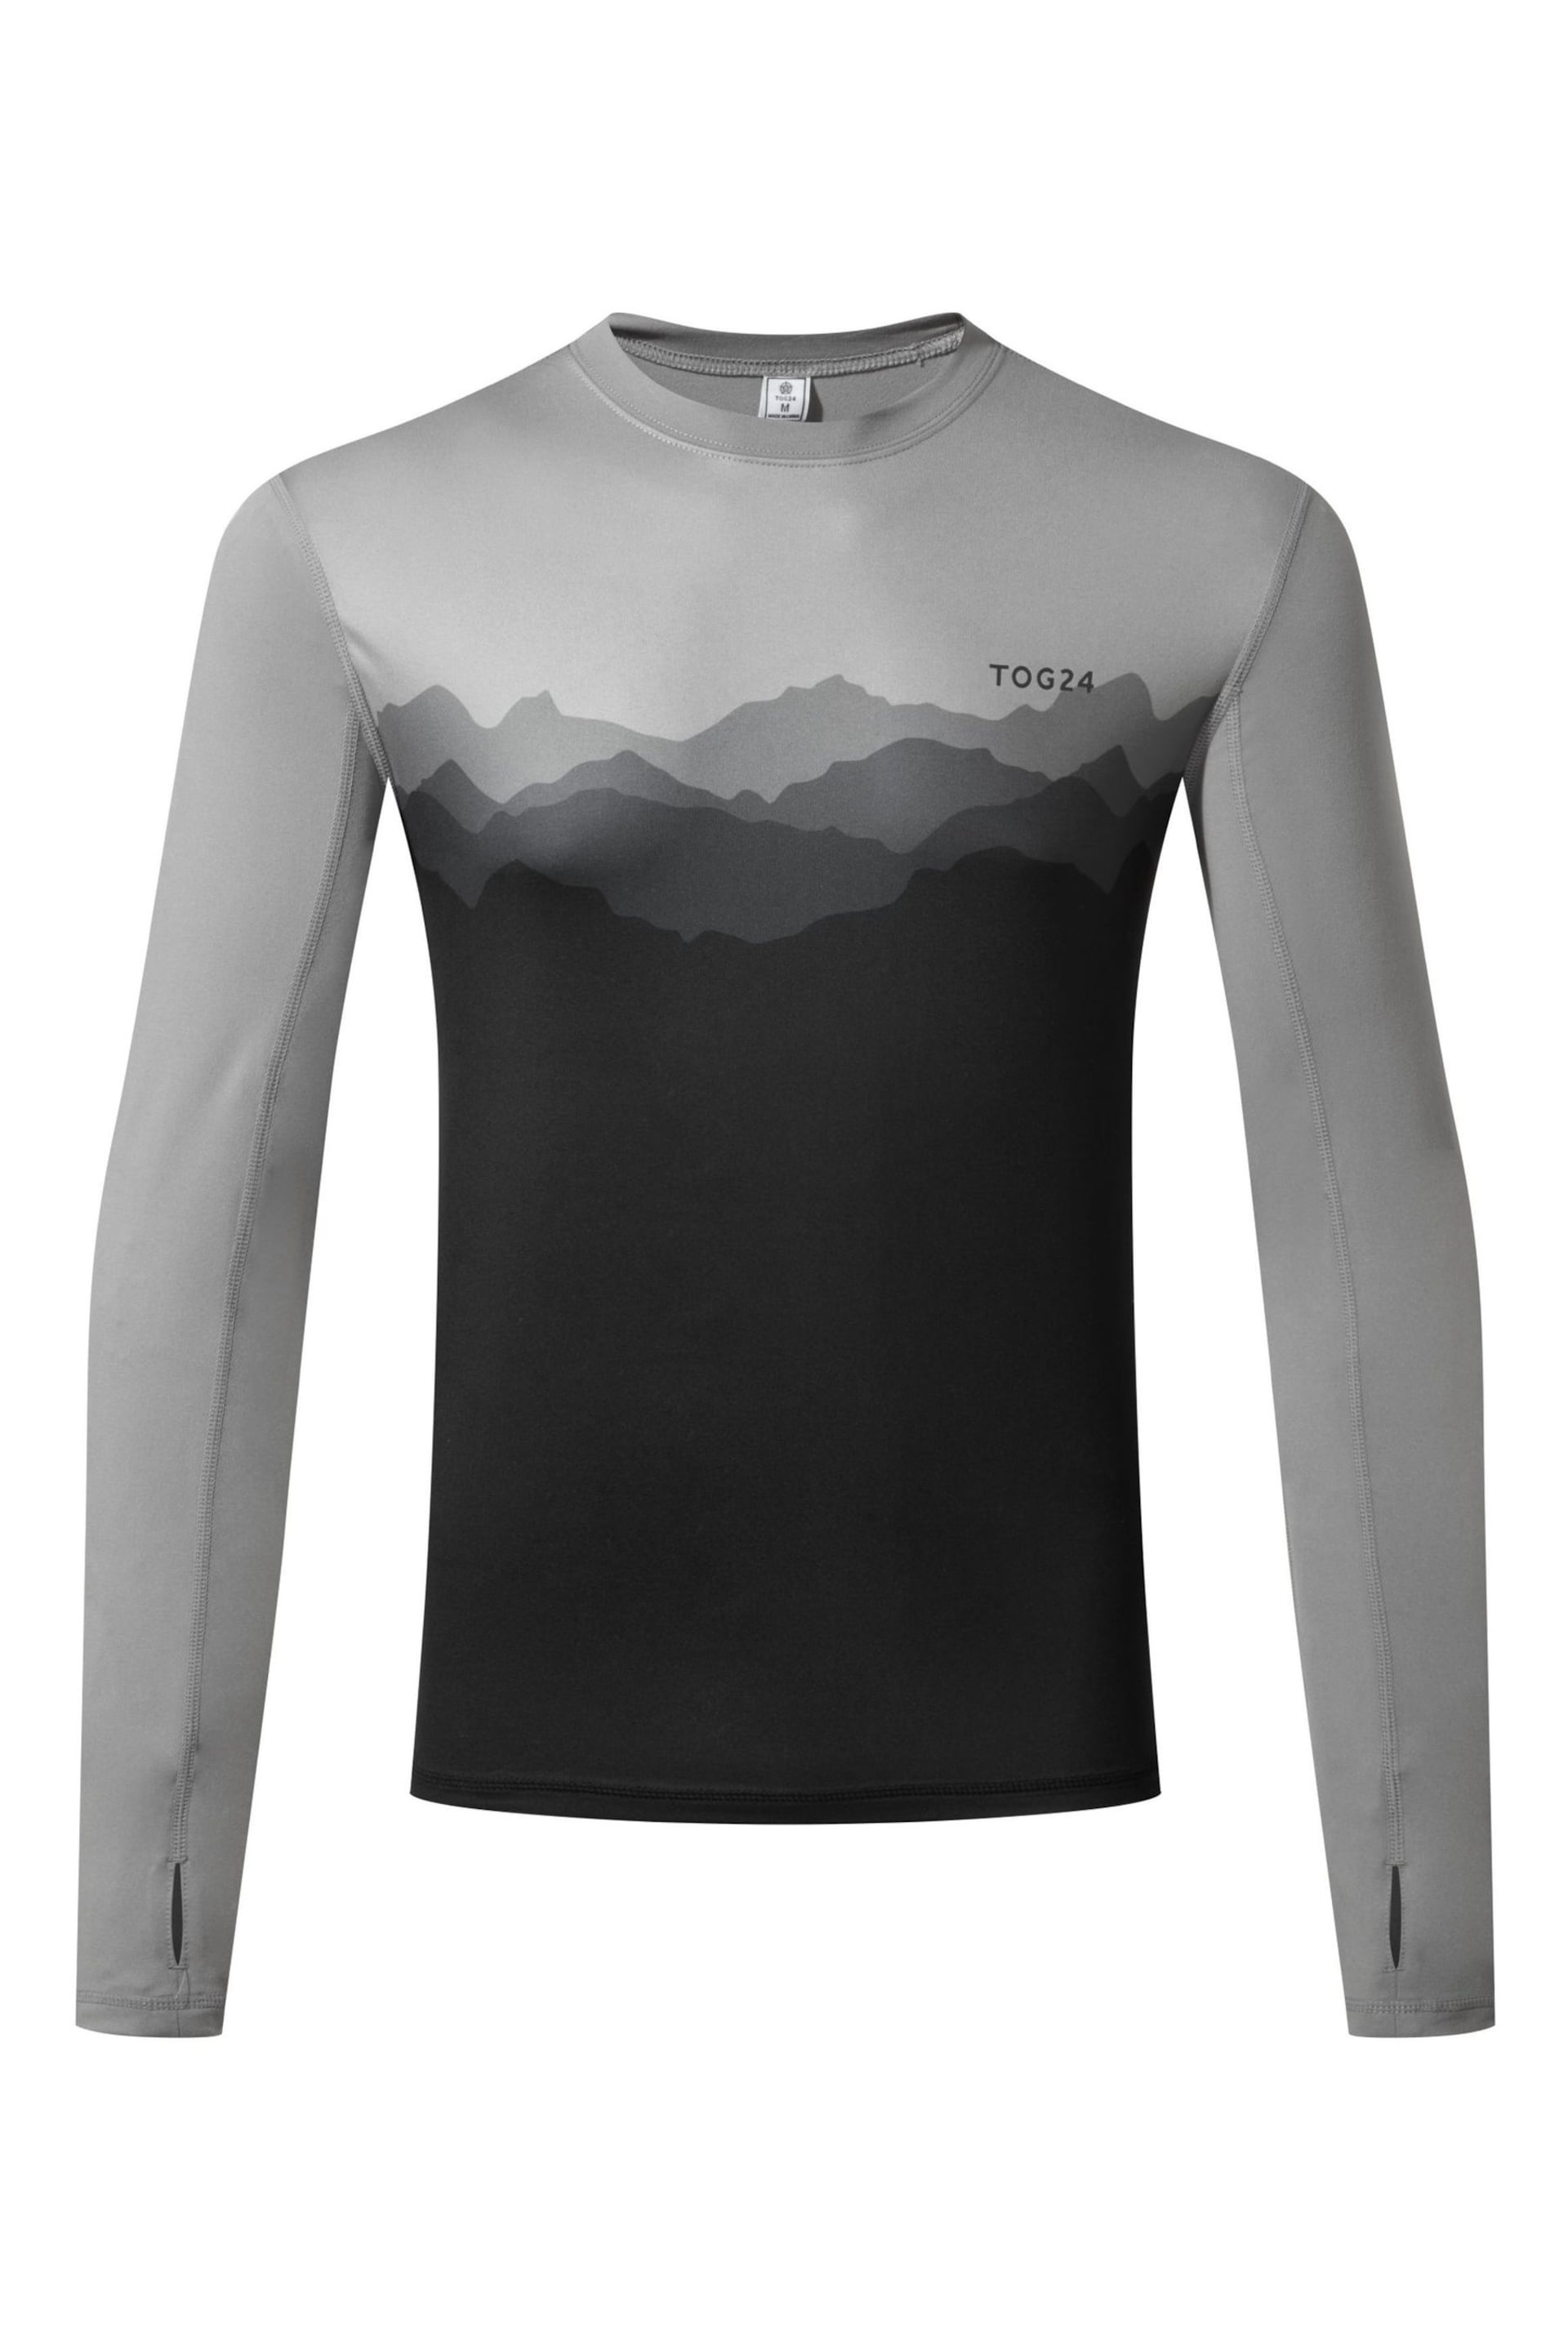 Tog 24 Charcoal Grey Snowdon Thermal Zip Neck Saga T-Shirt - Image 7 of 8